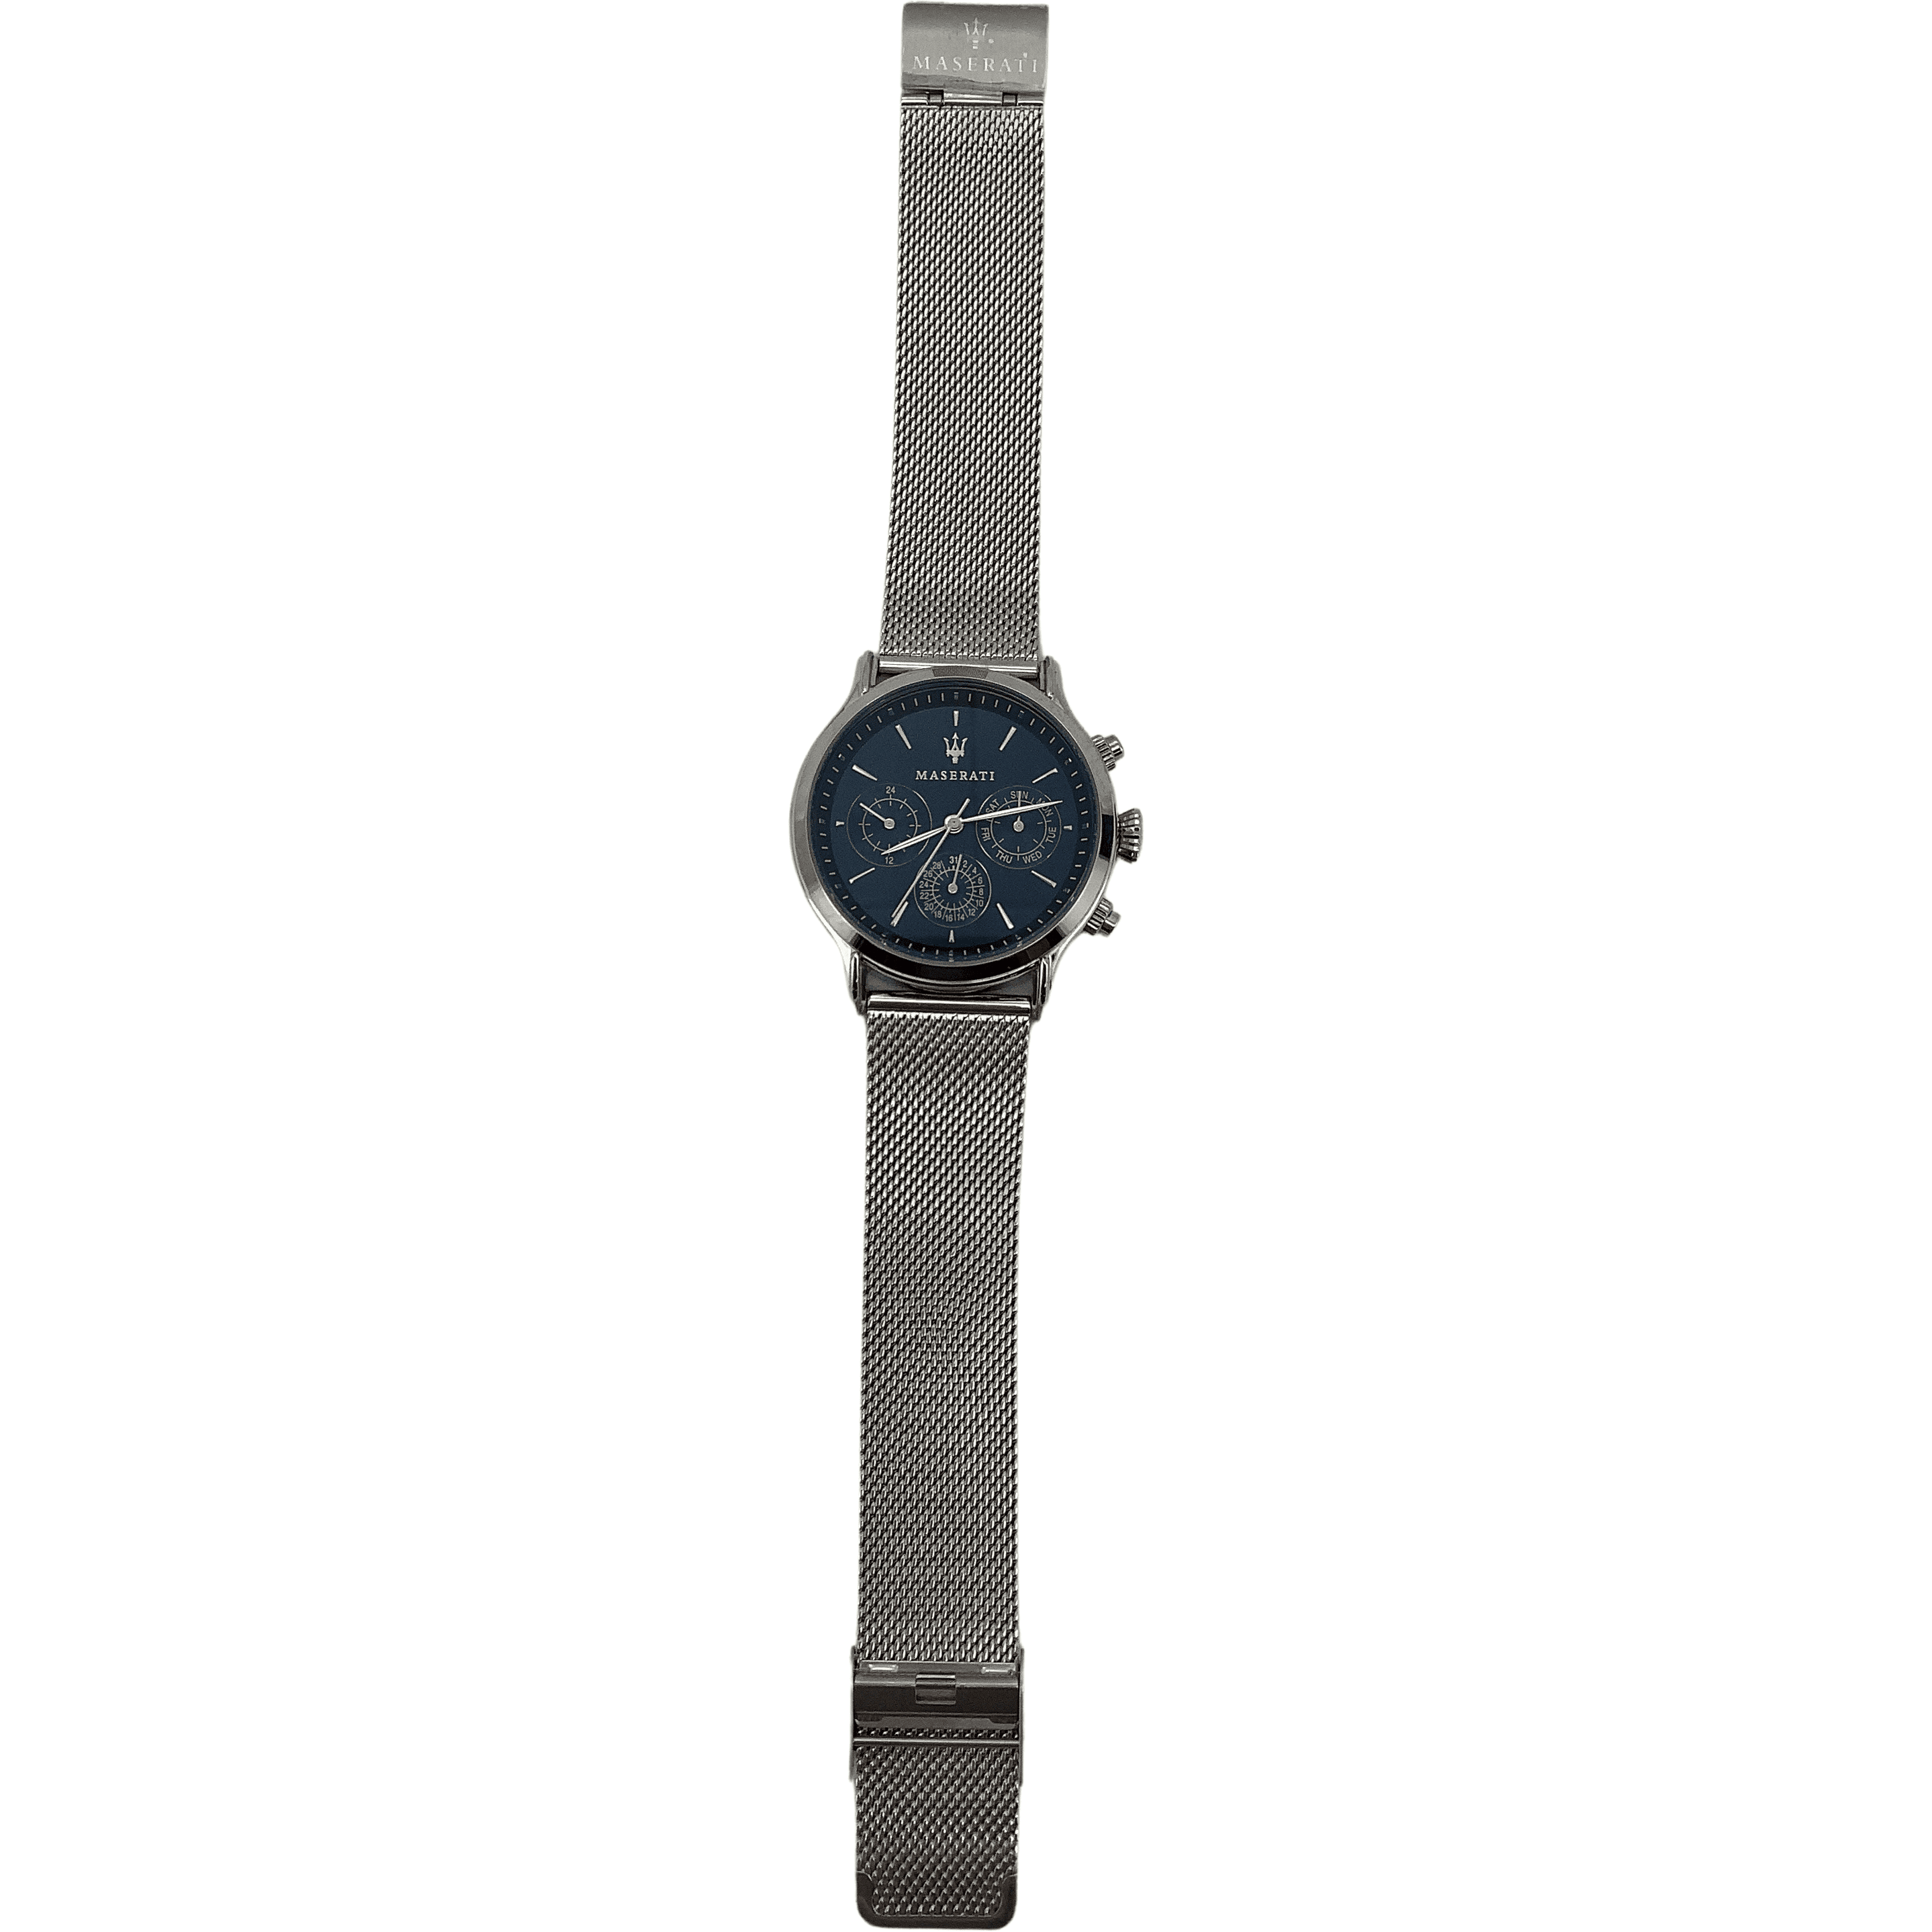 Maserati Men's Fashion Watch / Analog Wrist Watch / Stainless Steel / Men's Accessories